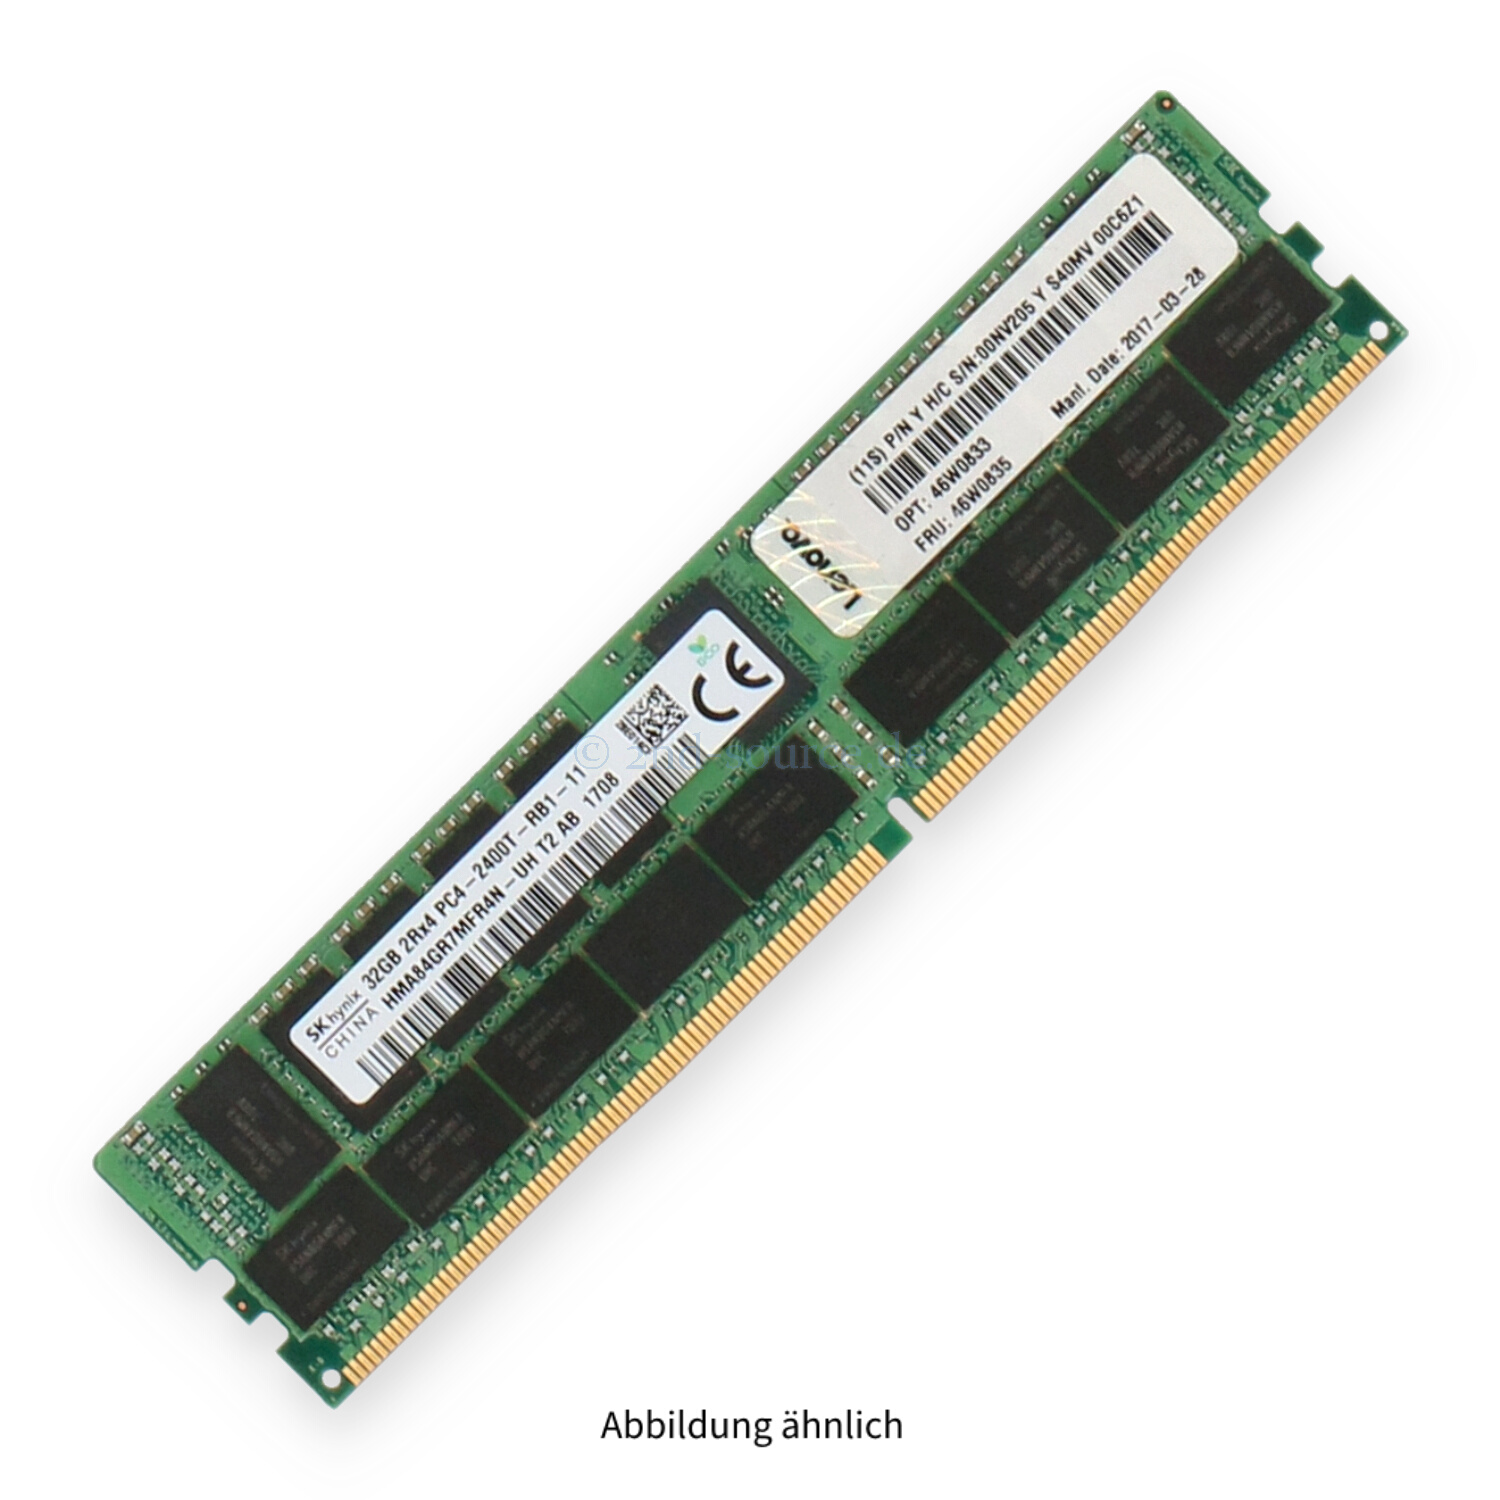 Lenovo 32GB PC4-19200T-R DIMM Dual Rank x4 (DDR4-2400) Registered ECC 46W0835